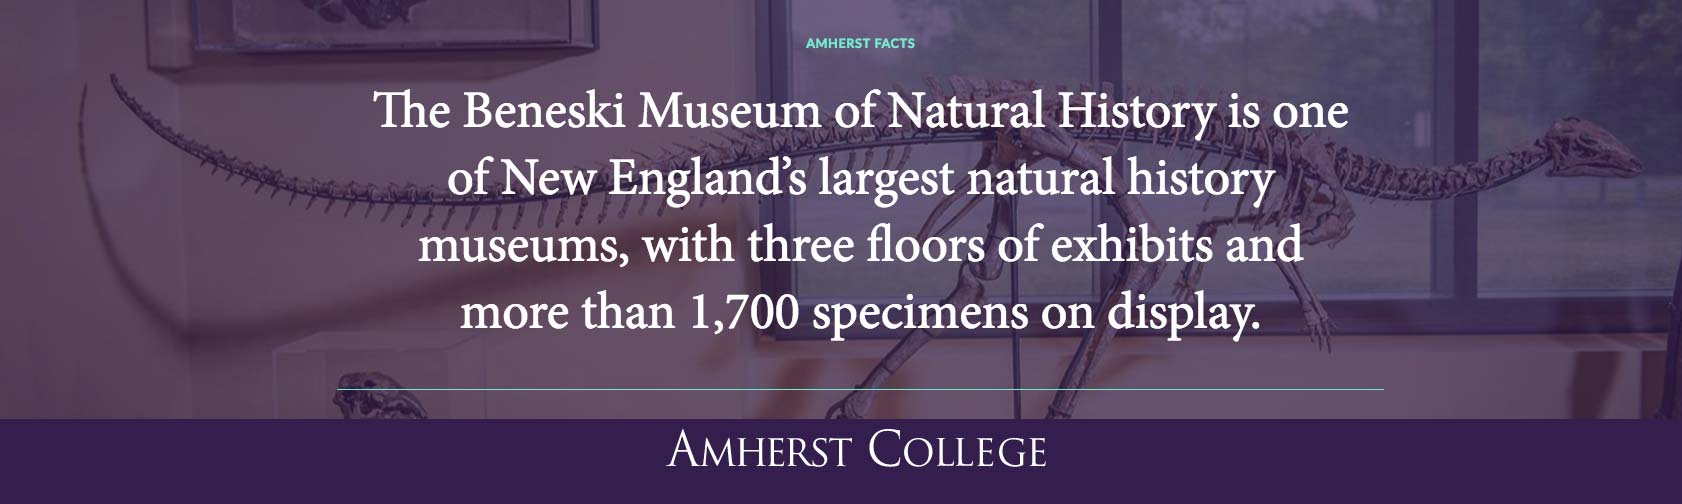 Beneski Museum Fact